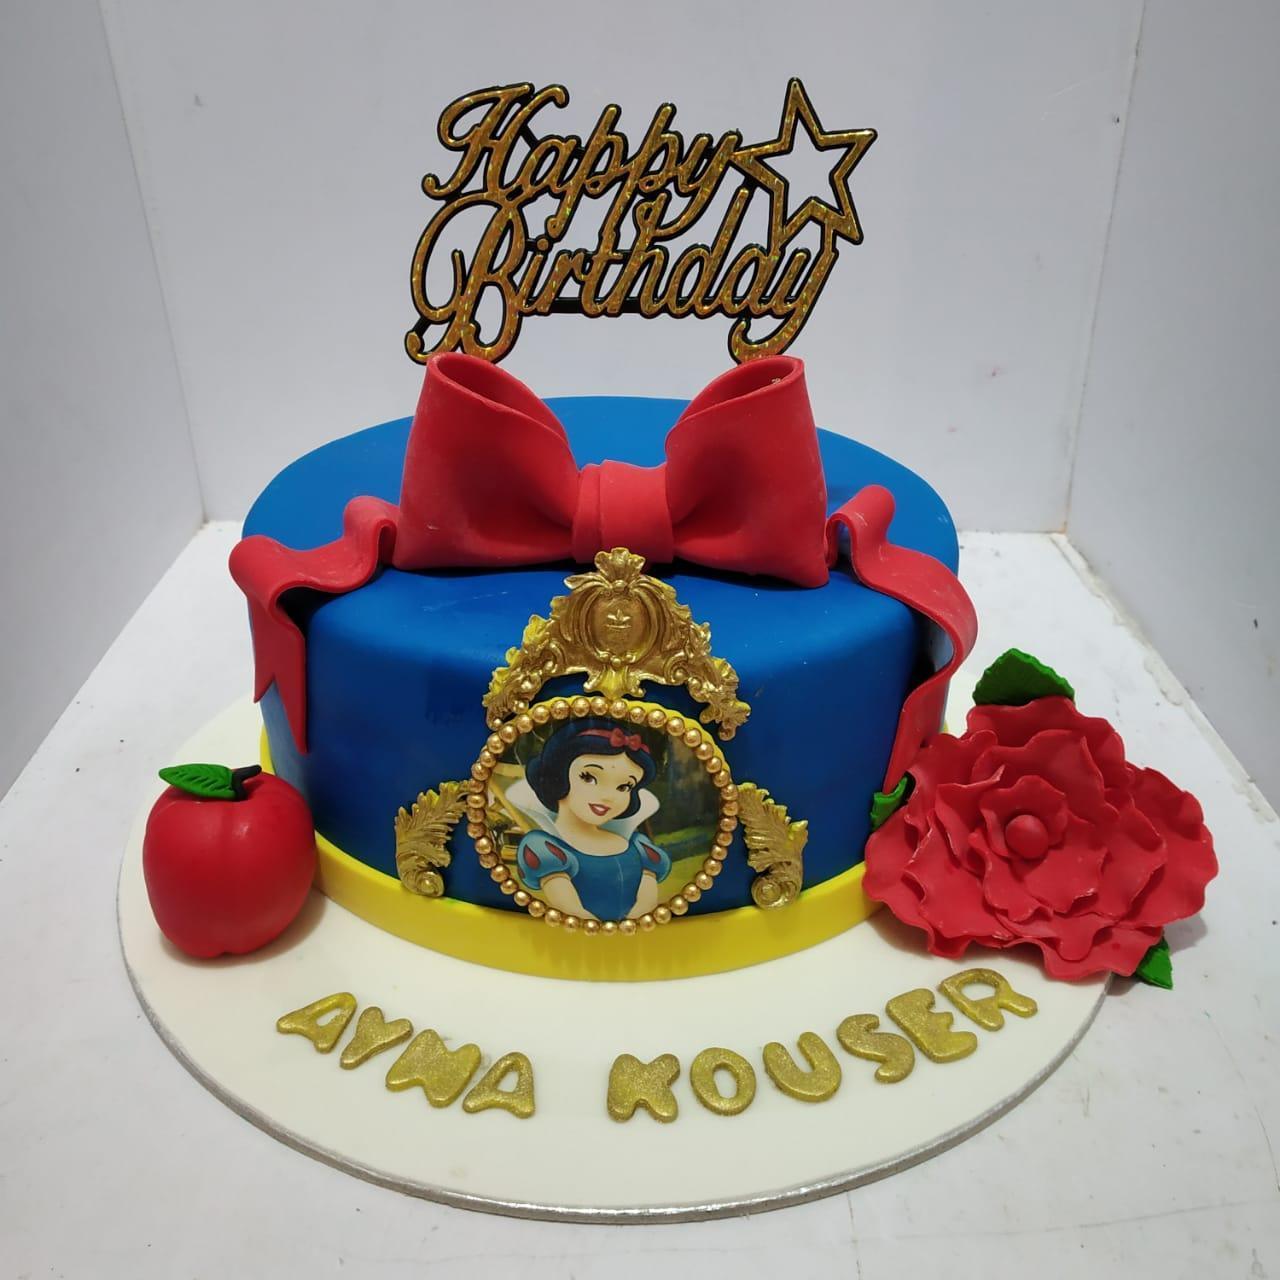 Snow White Princess Cake | Order Theme Cakes Online for your ...